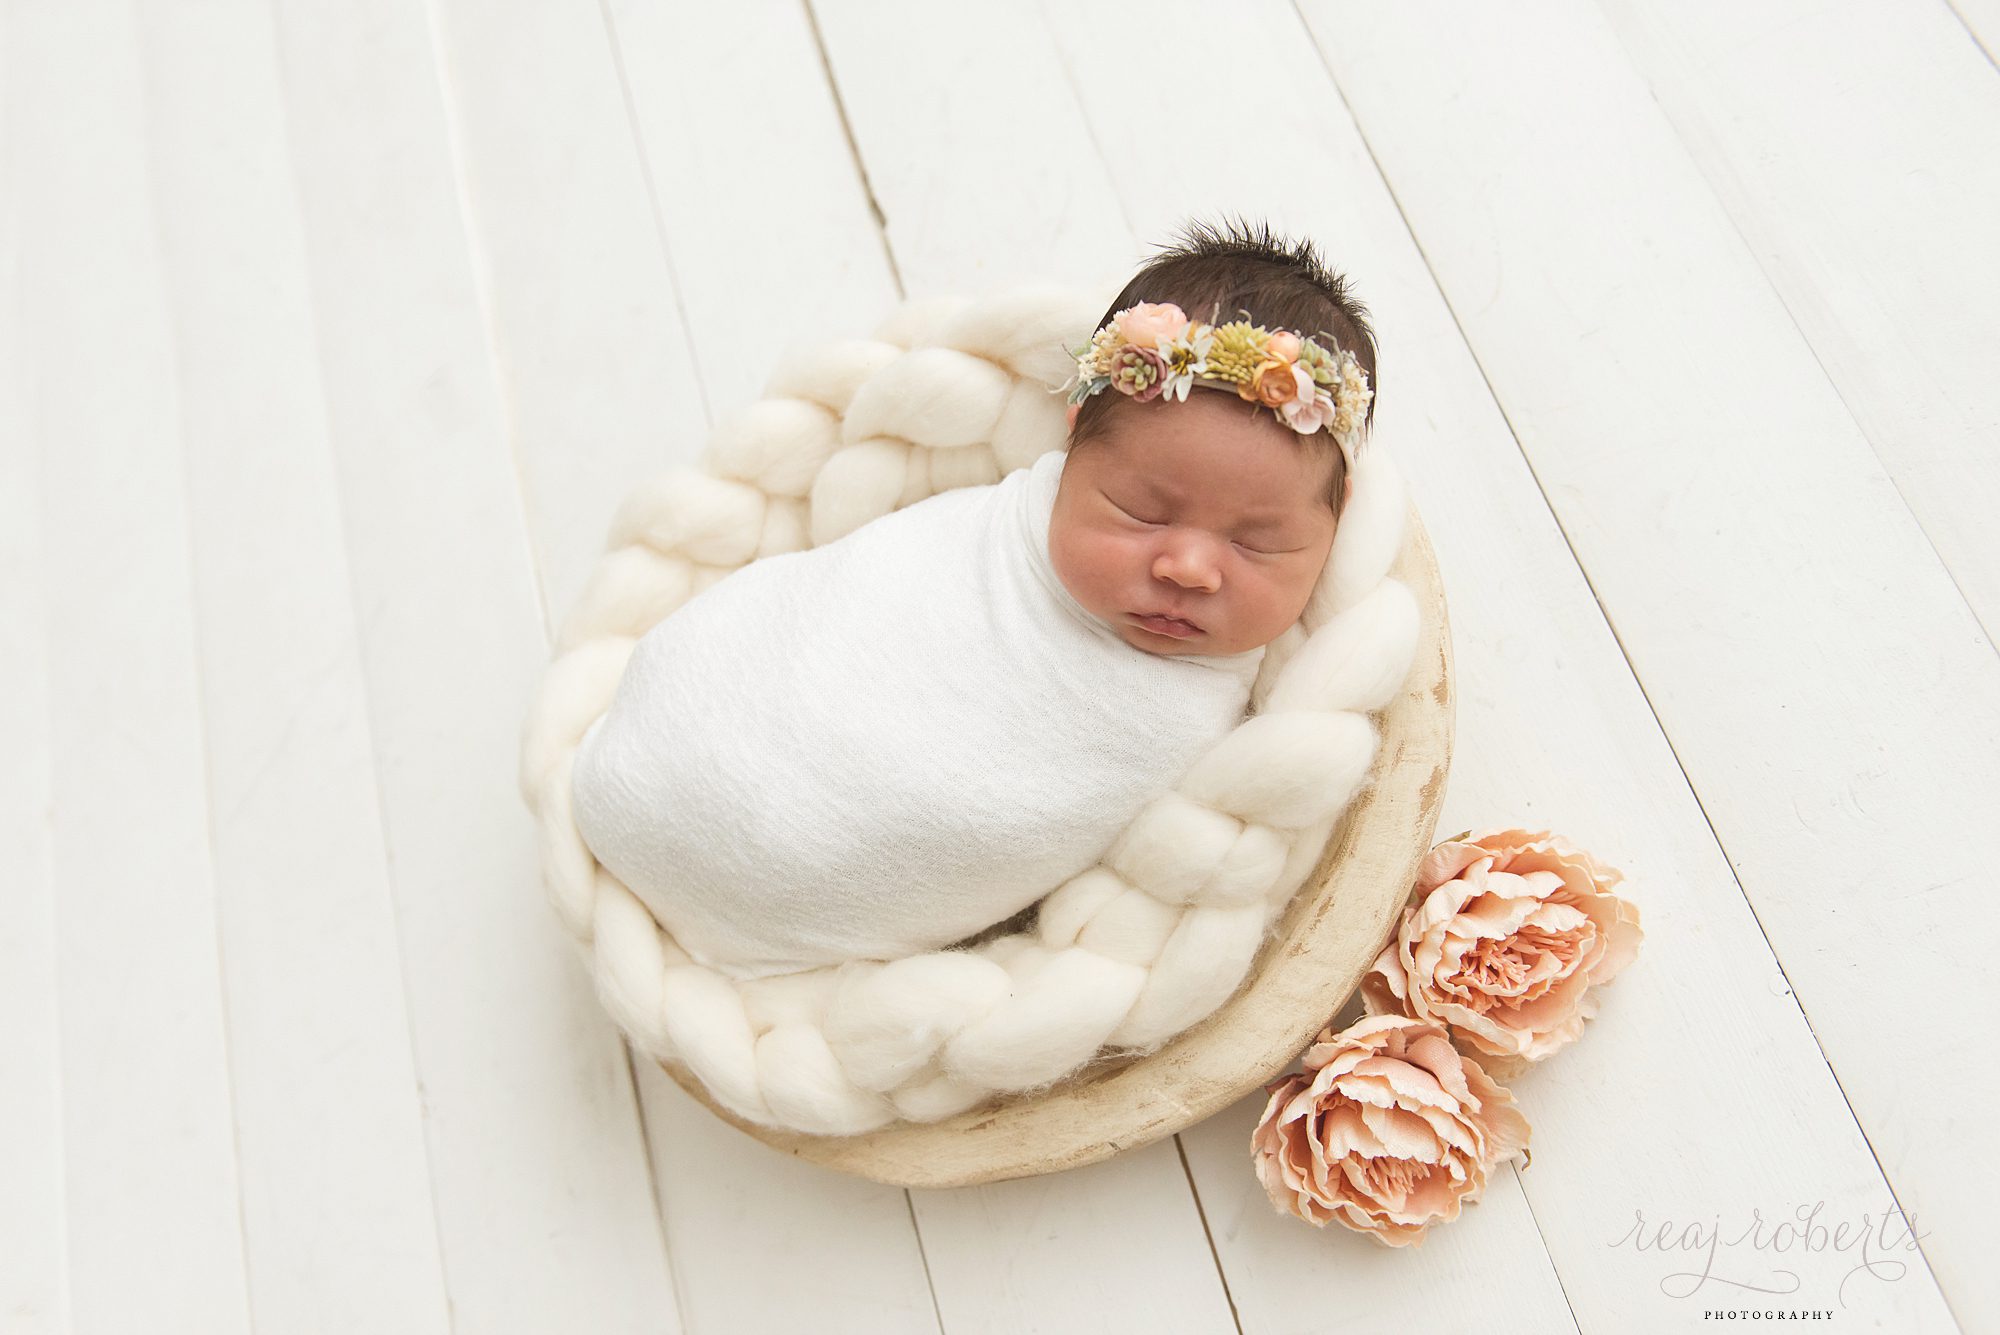 Chandler Baby Photographer | Reaj Roberts Photography | newborn girl with blush pink flowers inside a cream bowl on white wood floors farmhouse style succulent headband